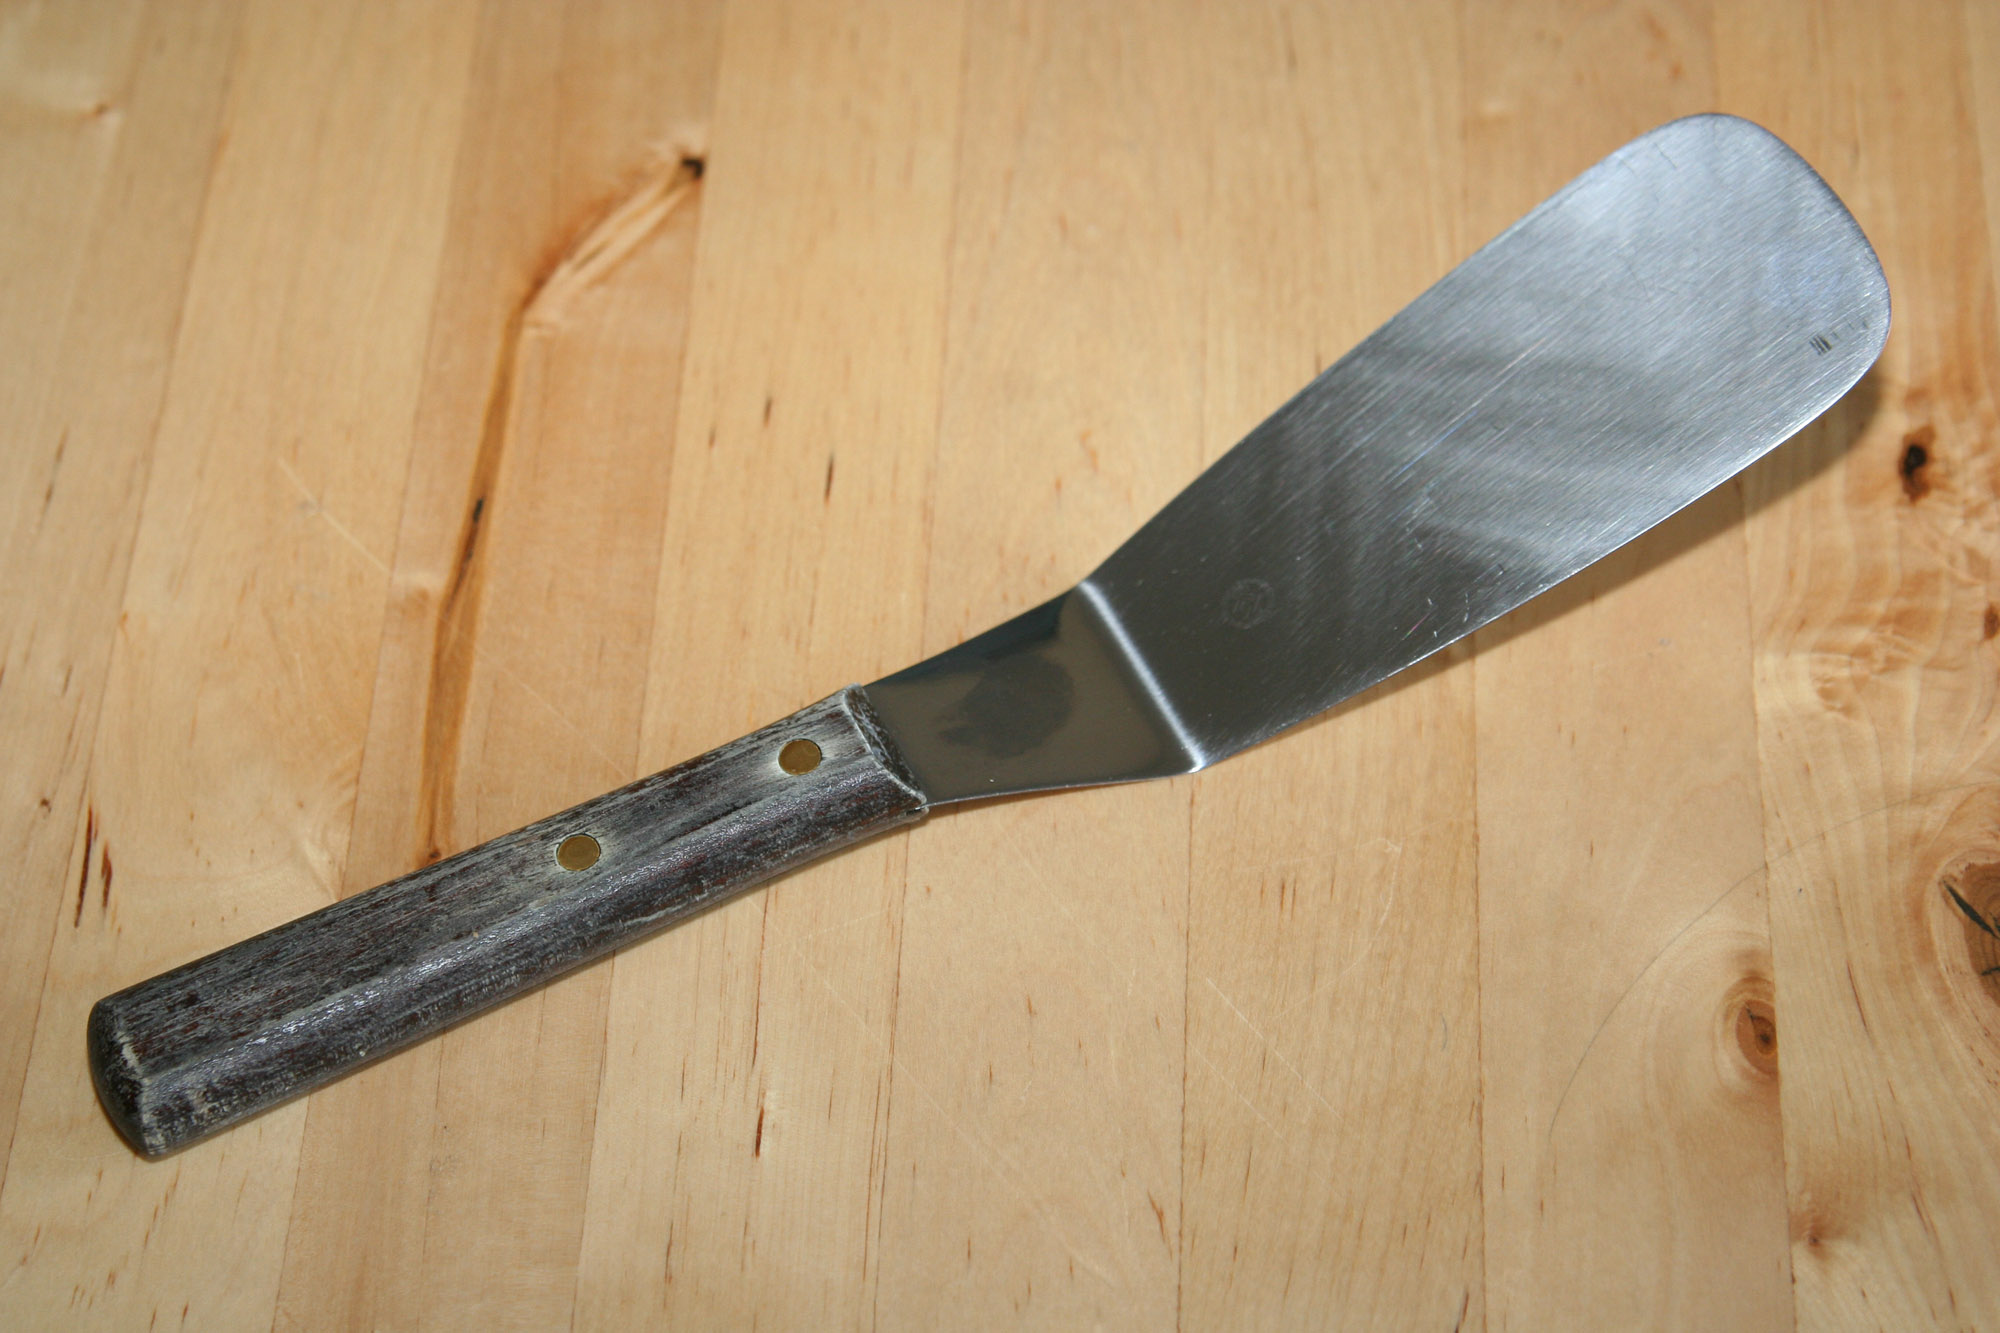 rubber spatula function